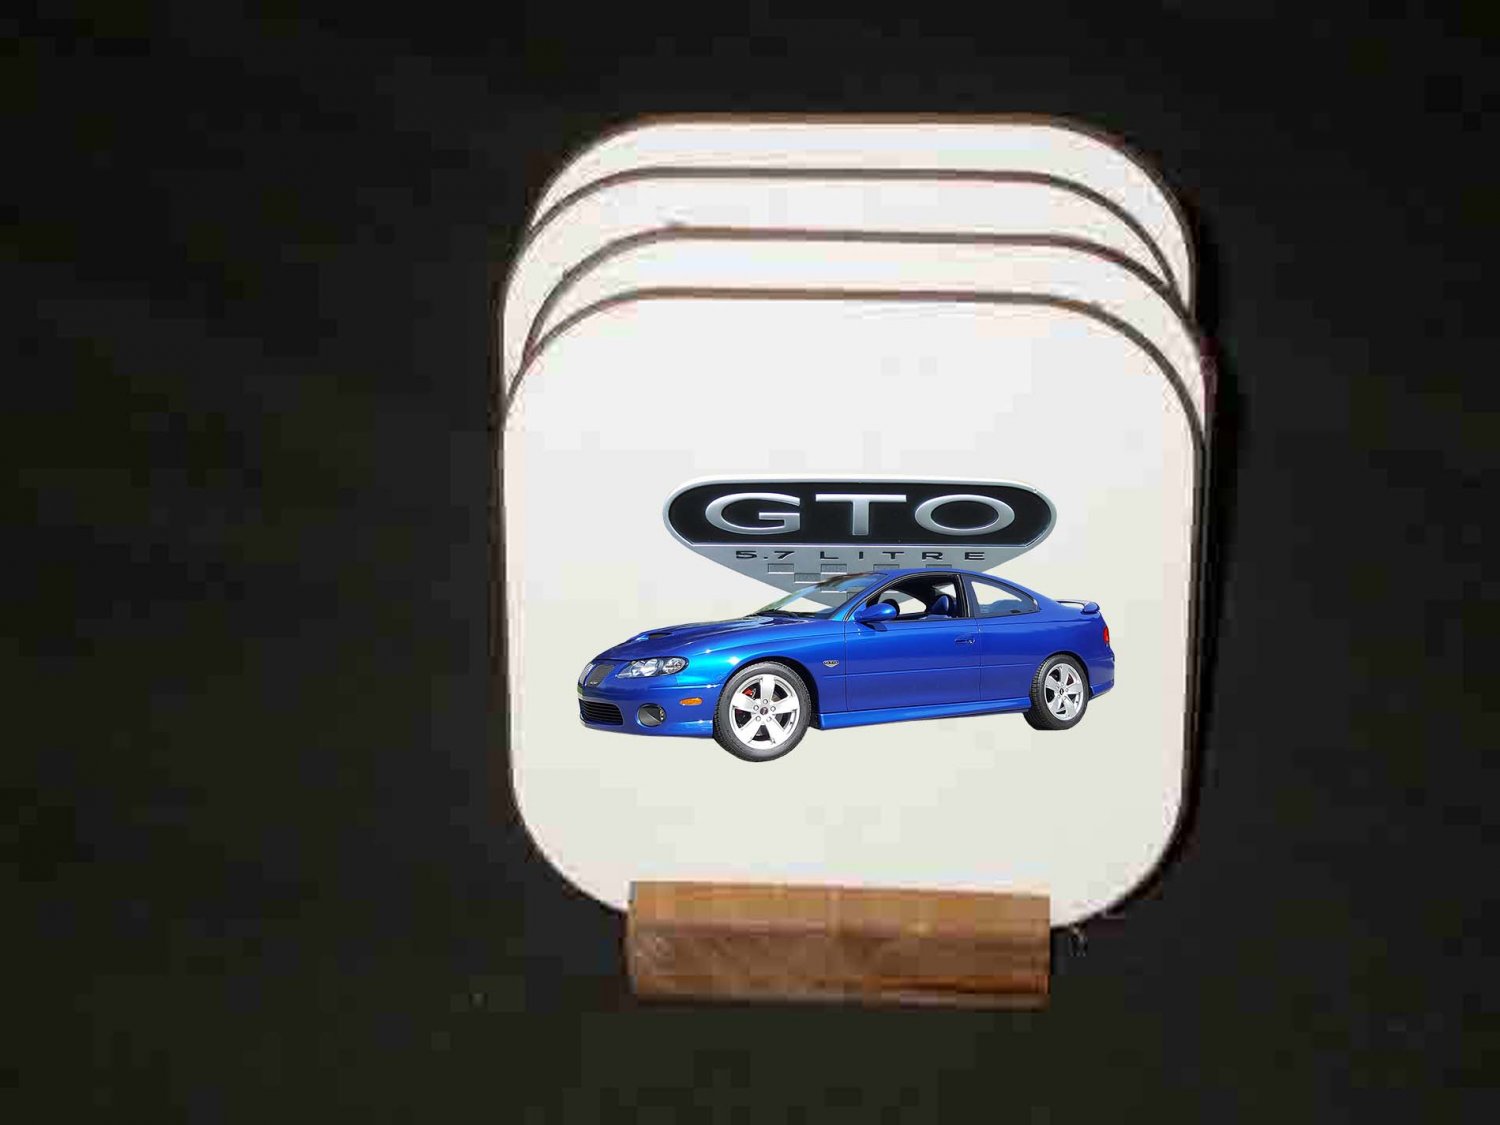 New 2005 Pontiac GTO Hard Coaster set!